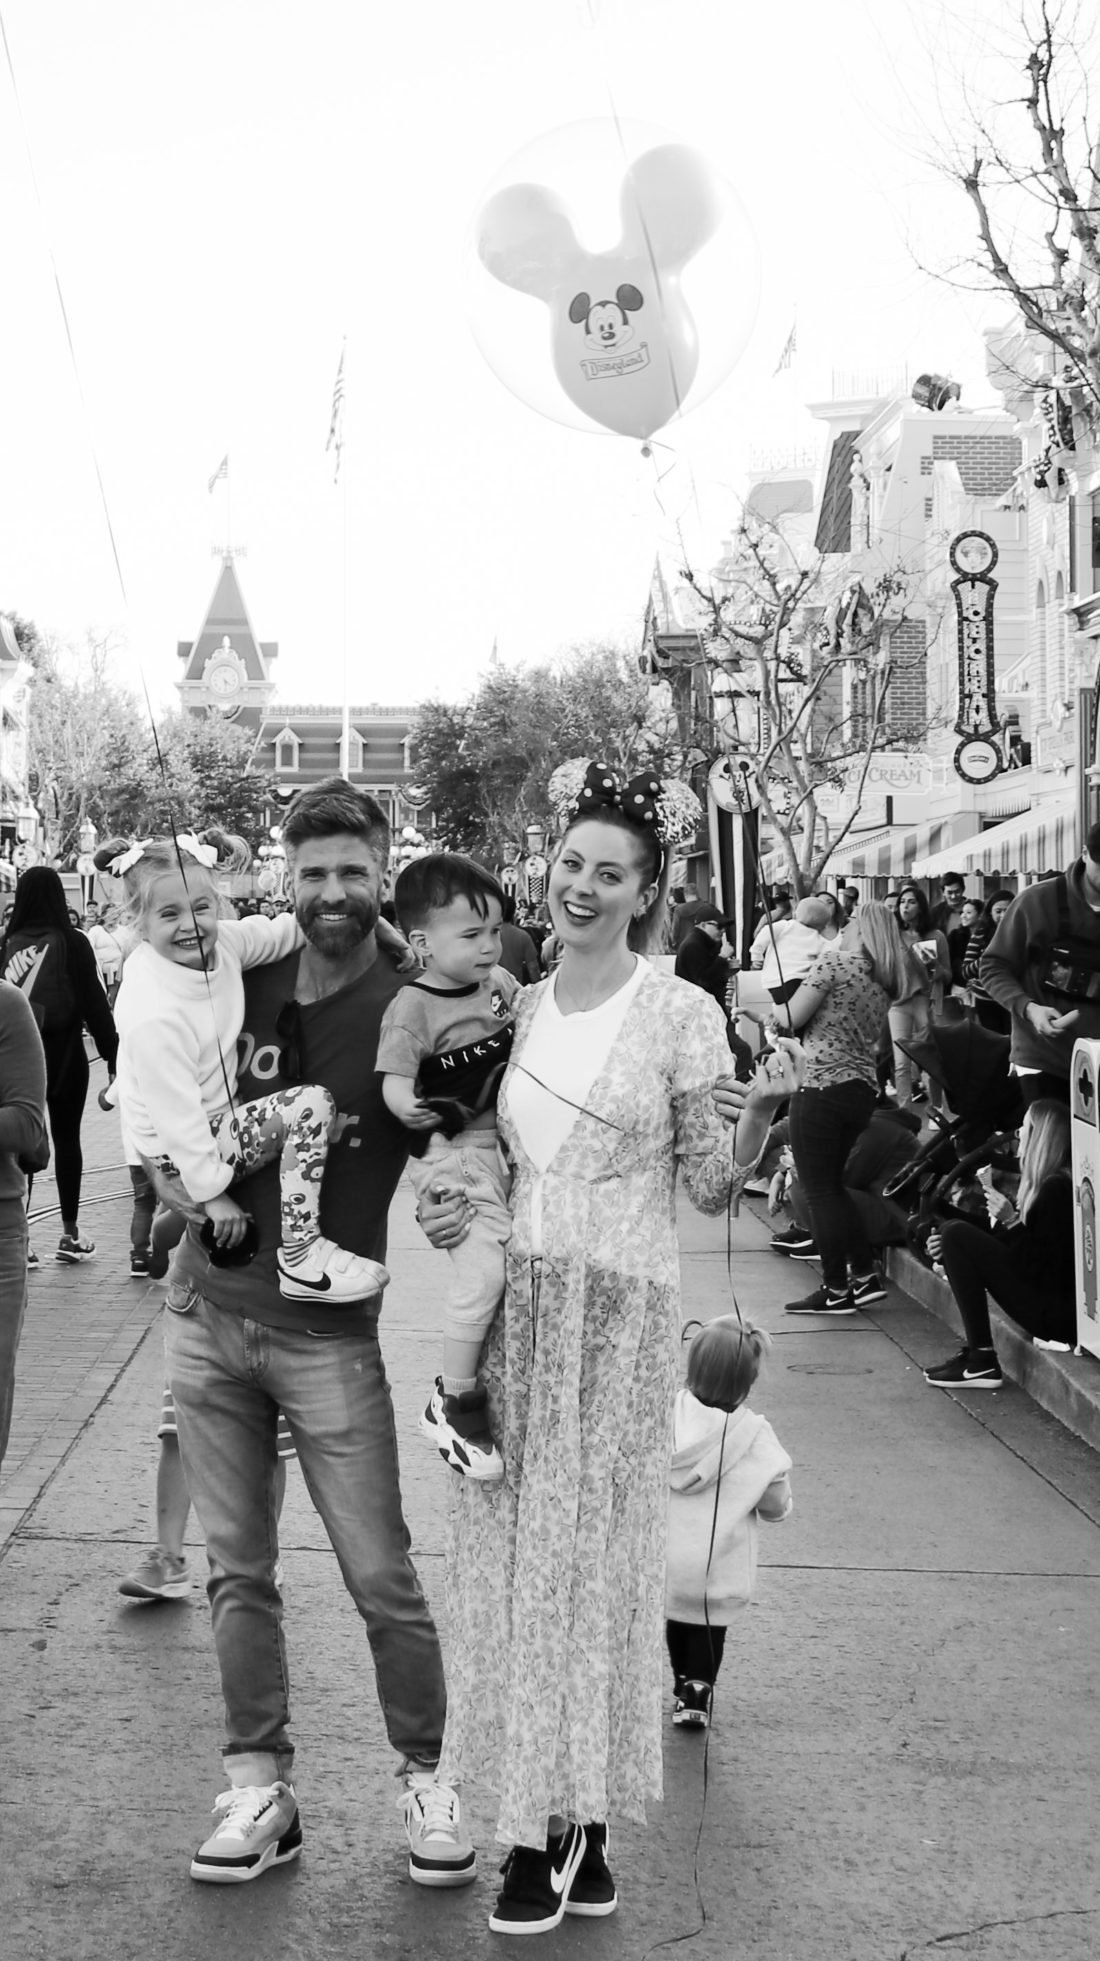 Eva Amurri Martino shares images from her family trip to Disneyland